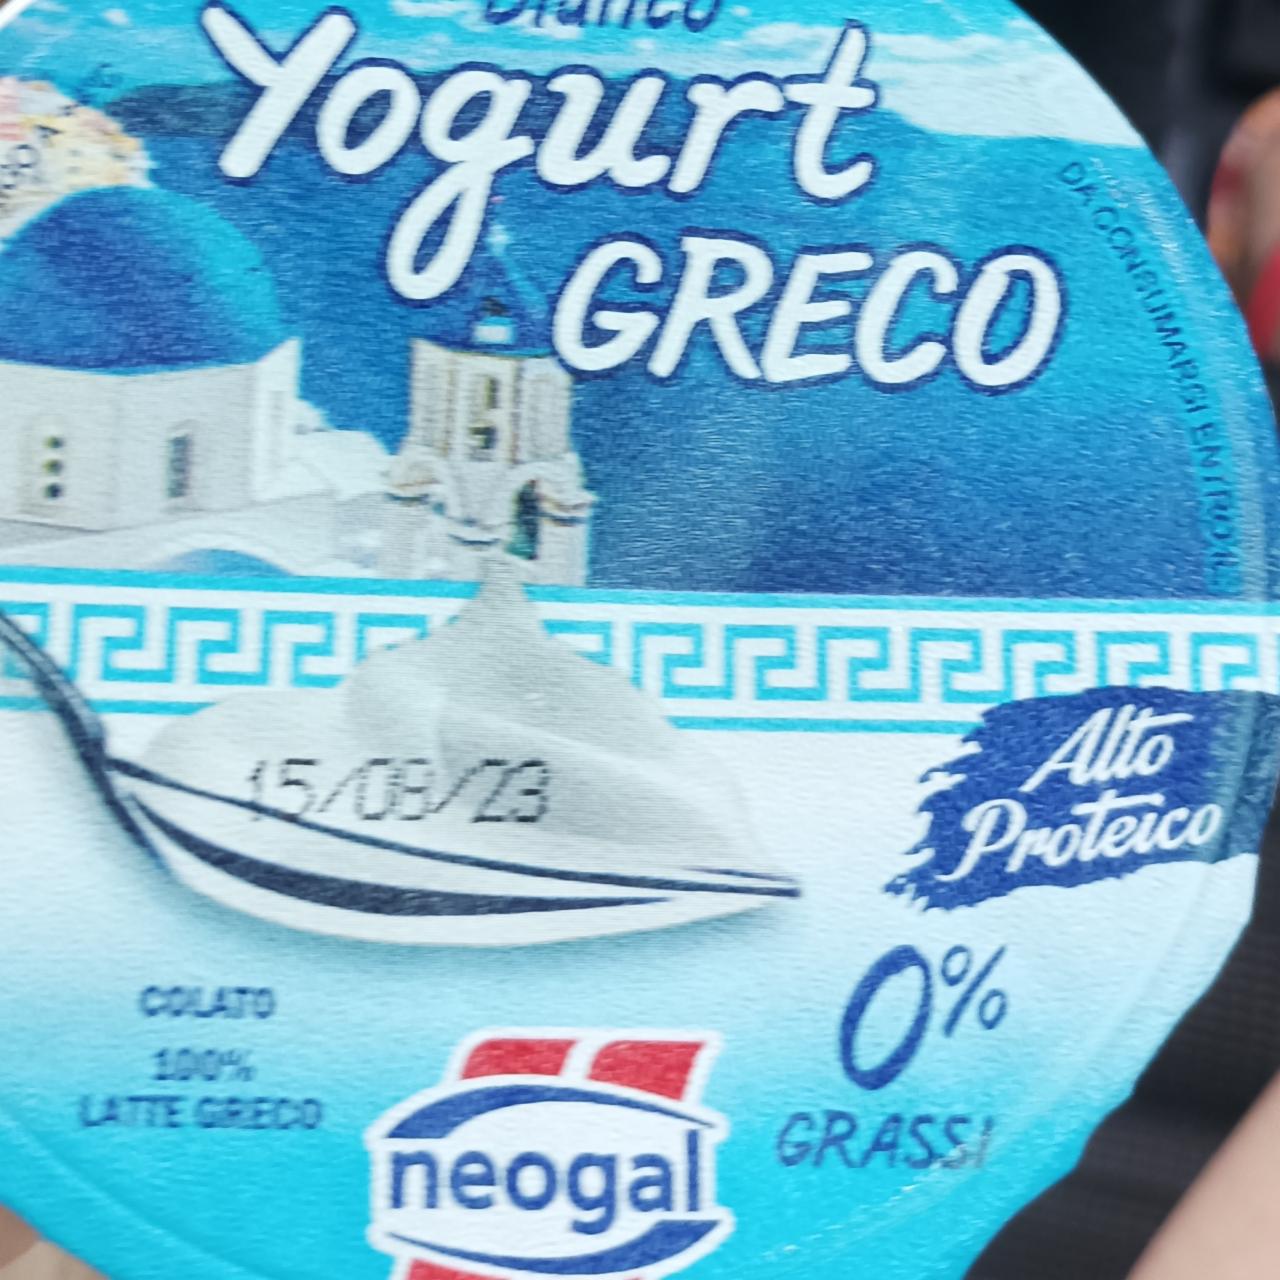 Fotografie - Yogurt greco 0% grassi bianco Neogal